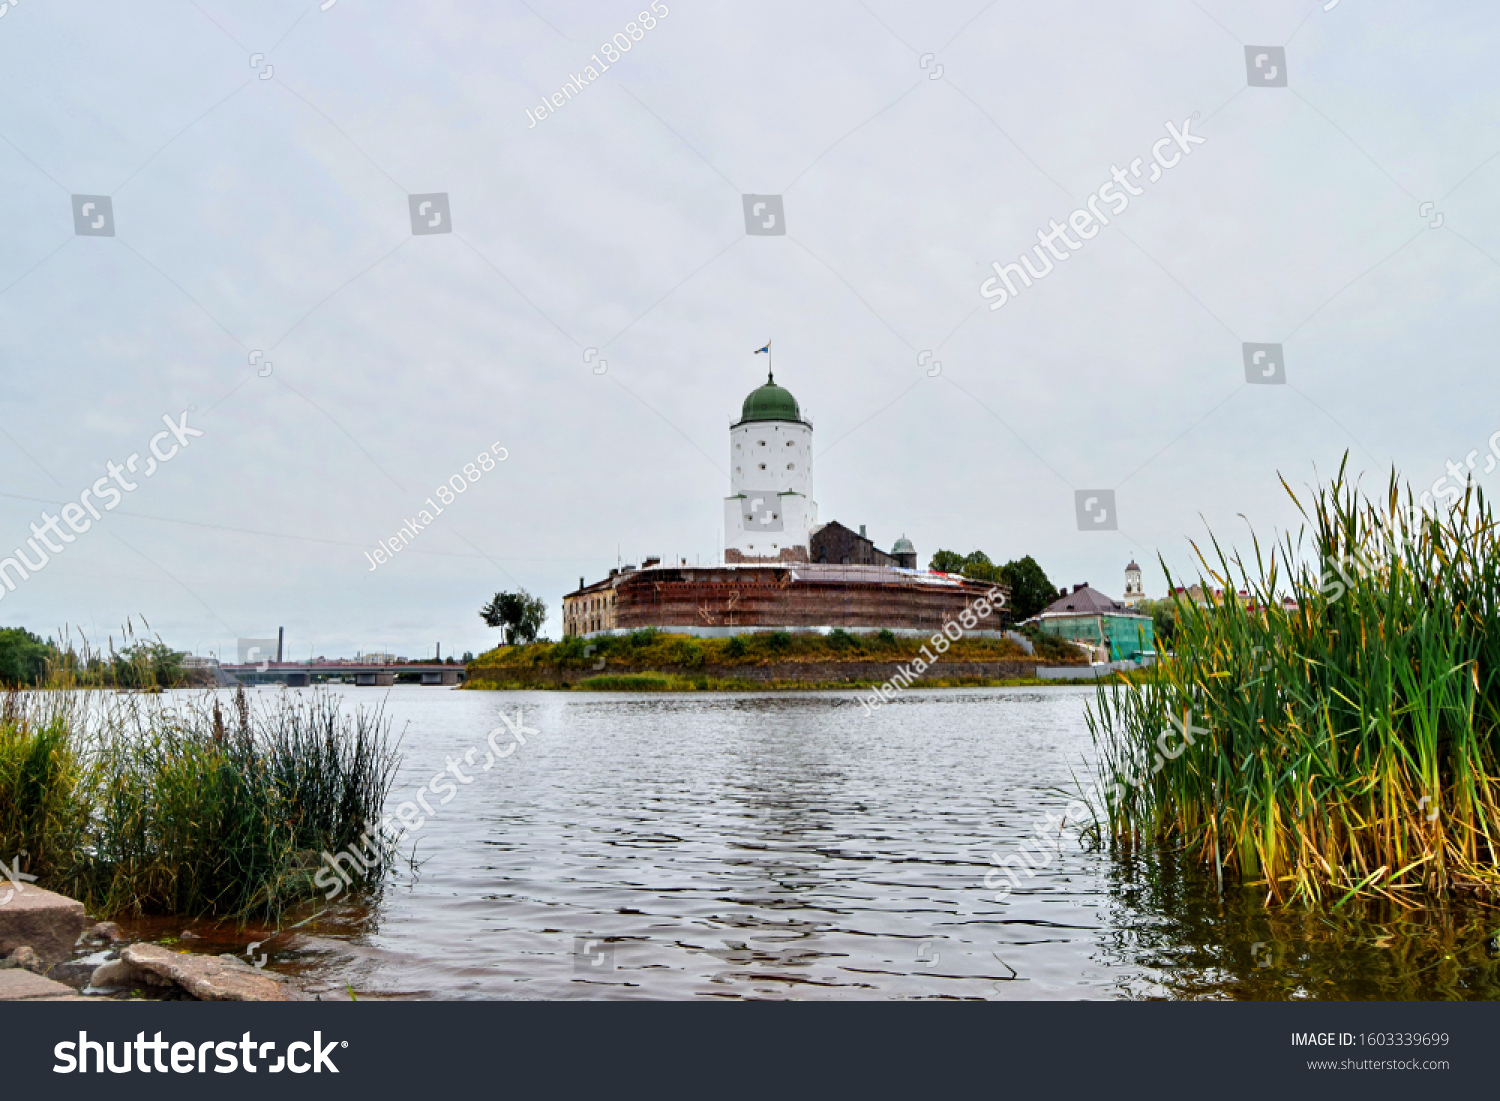 The most famous landmark in Vyborg #1603339699